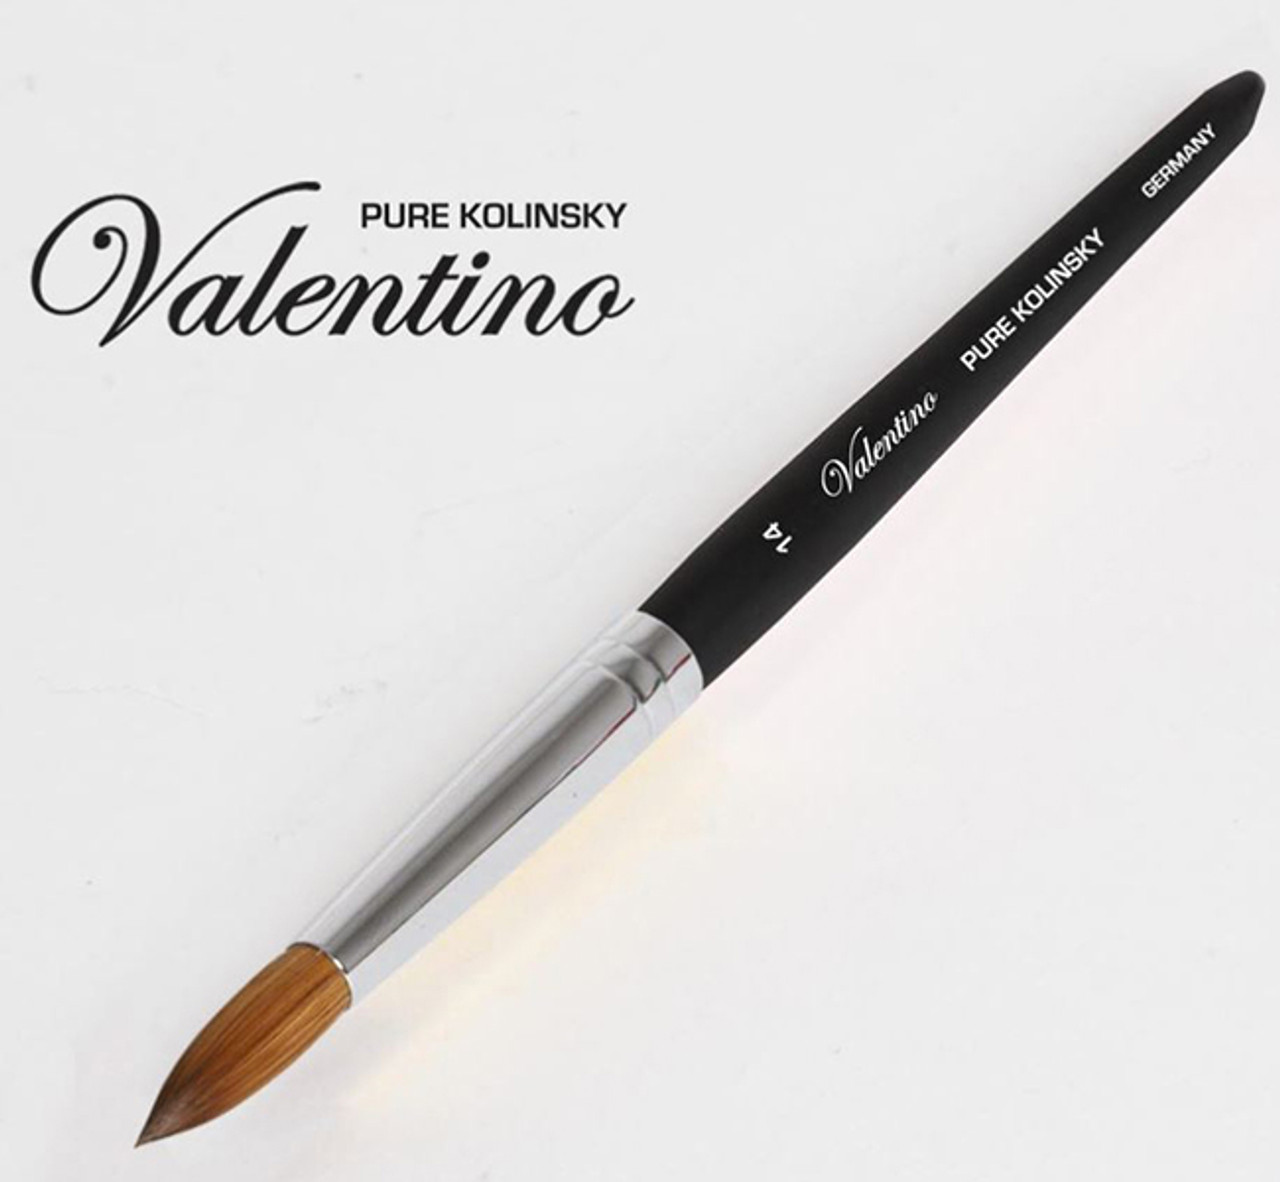 Valentino Pure Kolinsky Black Wood Handle #14